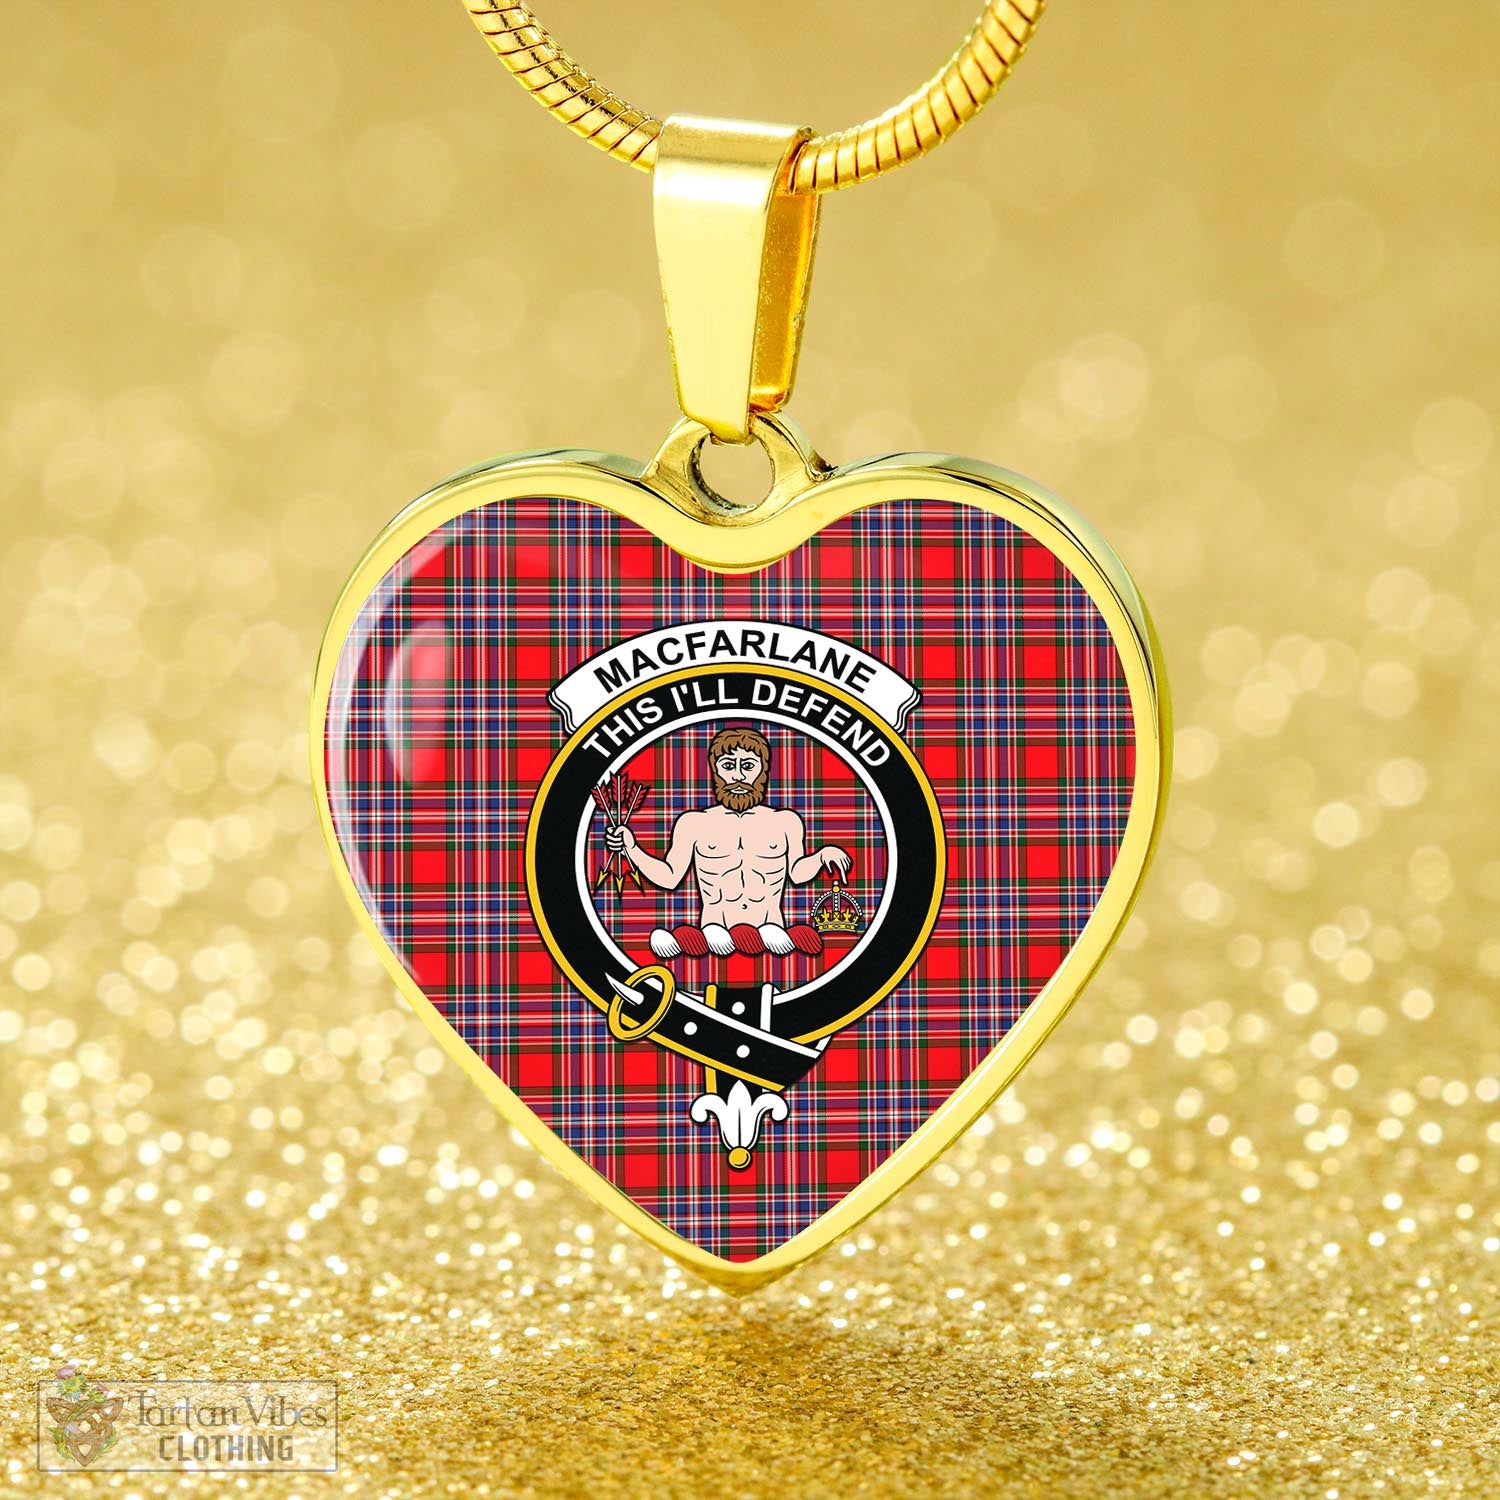 Tartan Vibes Clothing MacFarlane Modern Tartan Heart Necklace with Family Crest